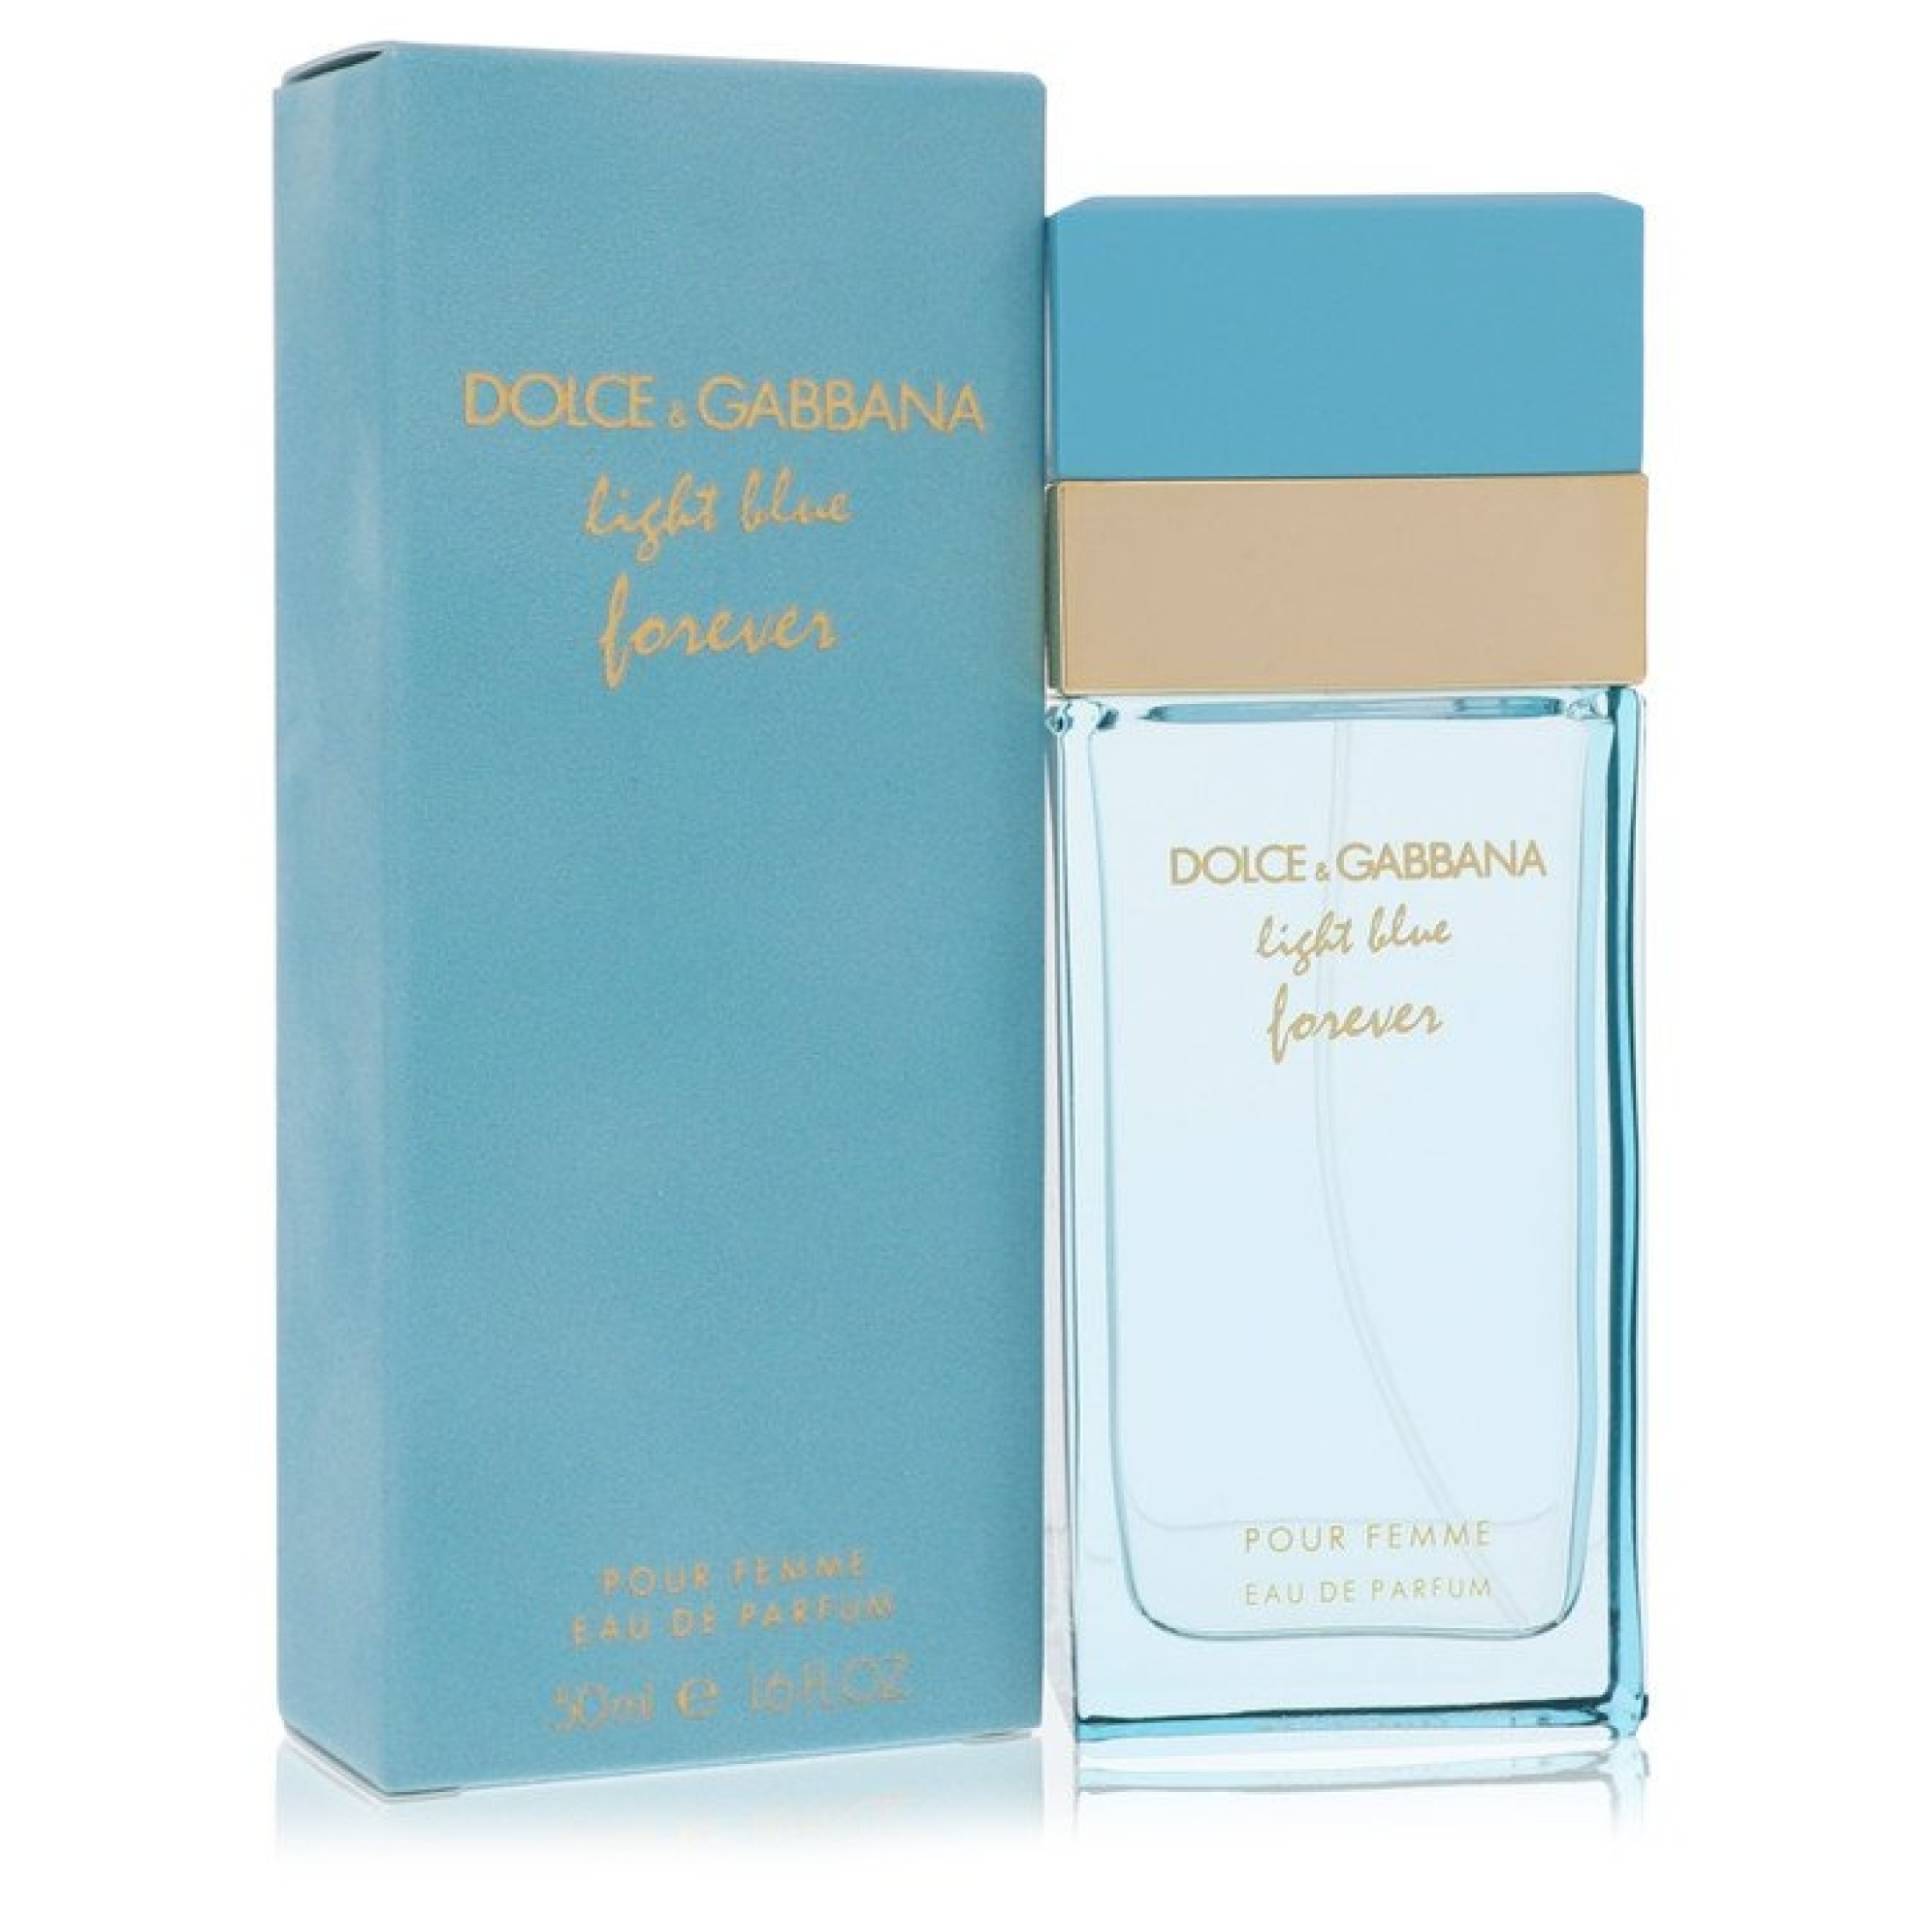 Dolce & Gabbana Light Blue Forever Eau De Parfum Spray 50 ml von Dolce & Gabbana